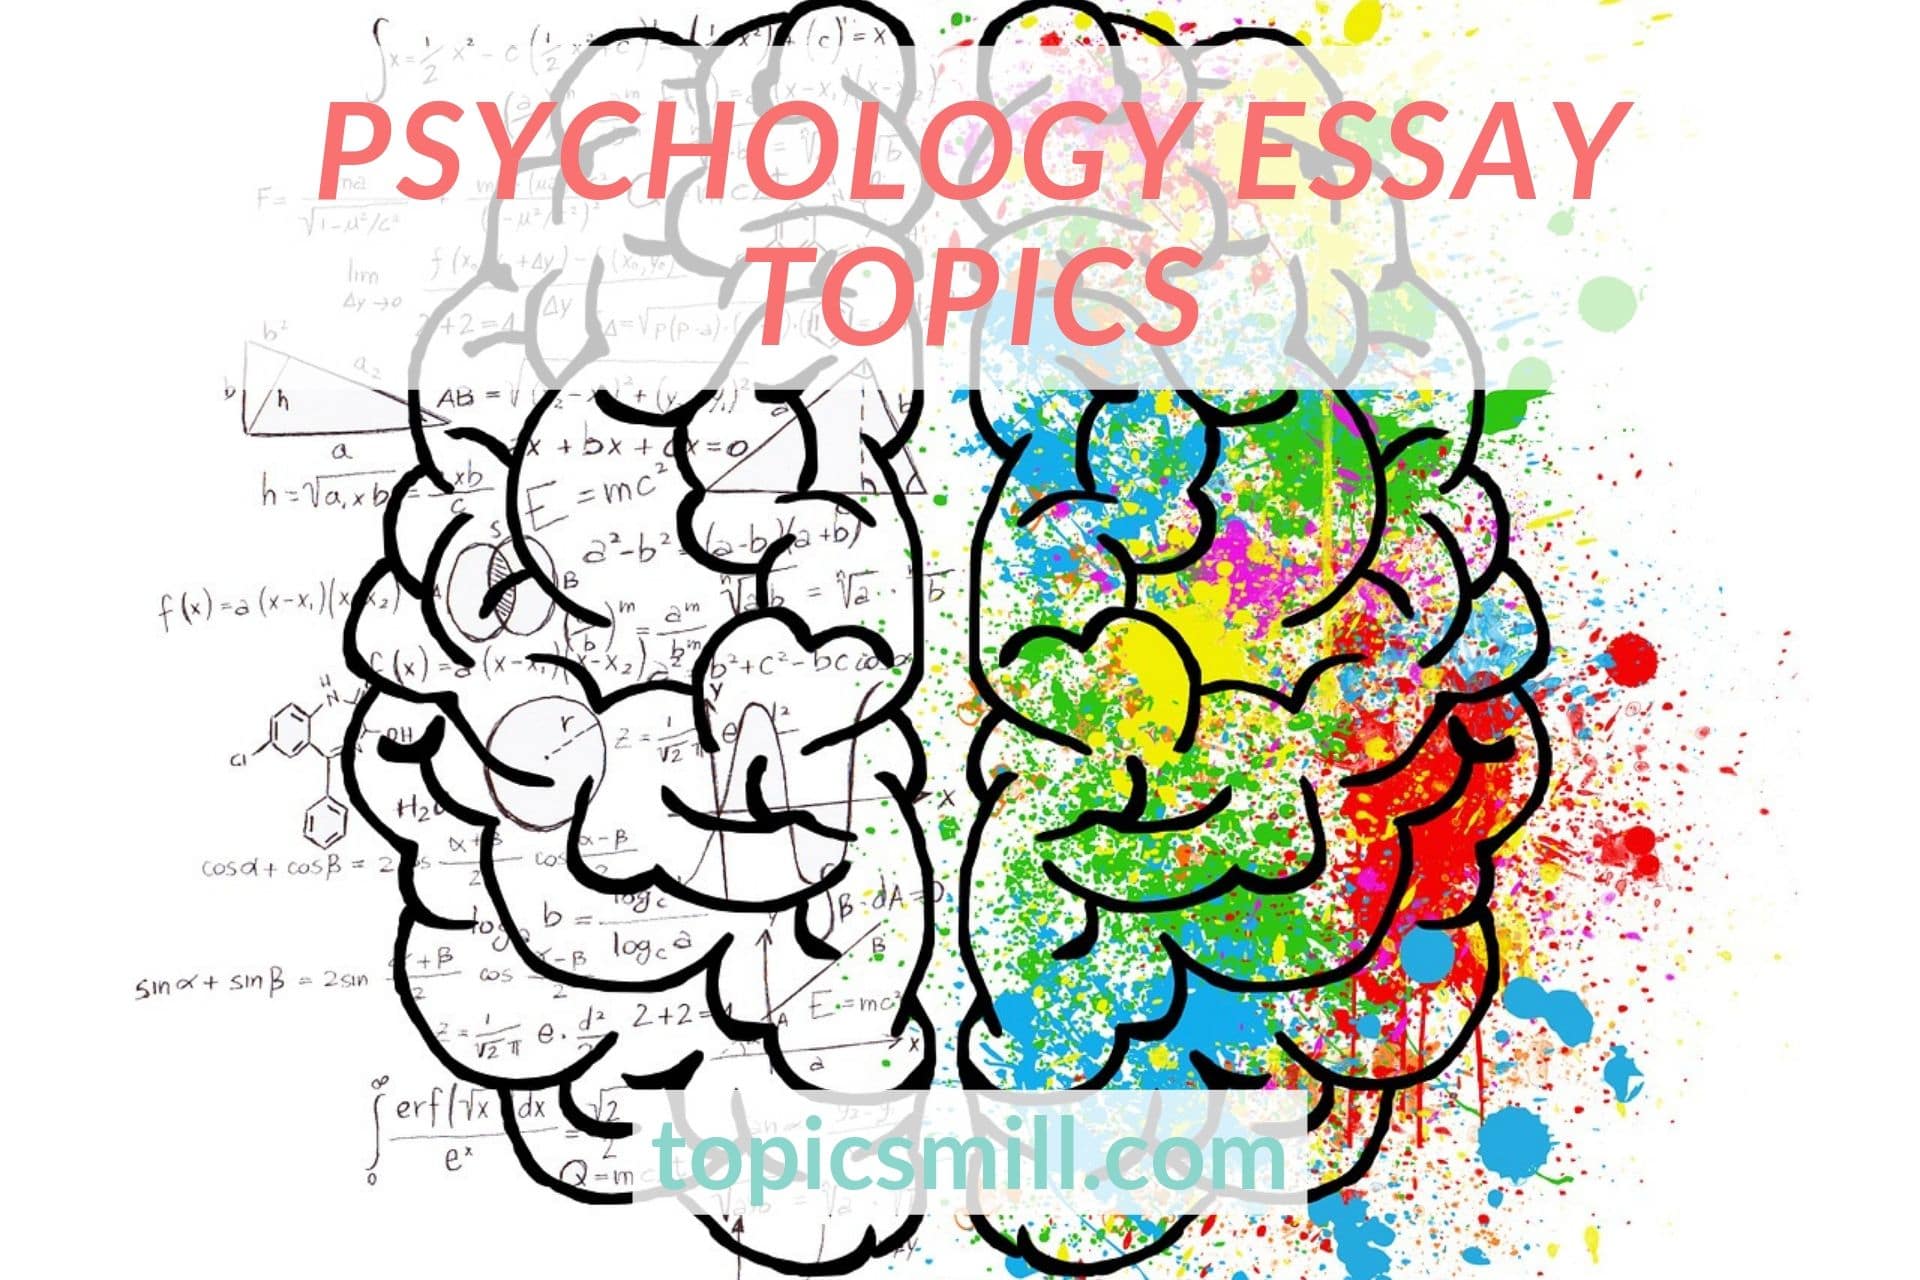 Psychology essay topics